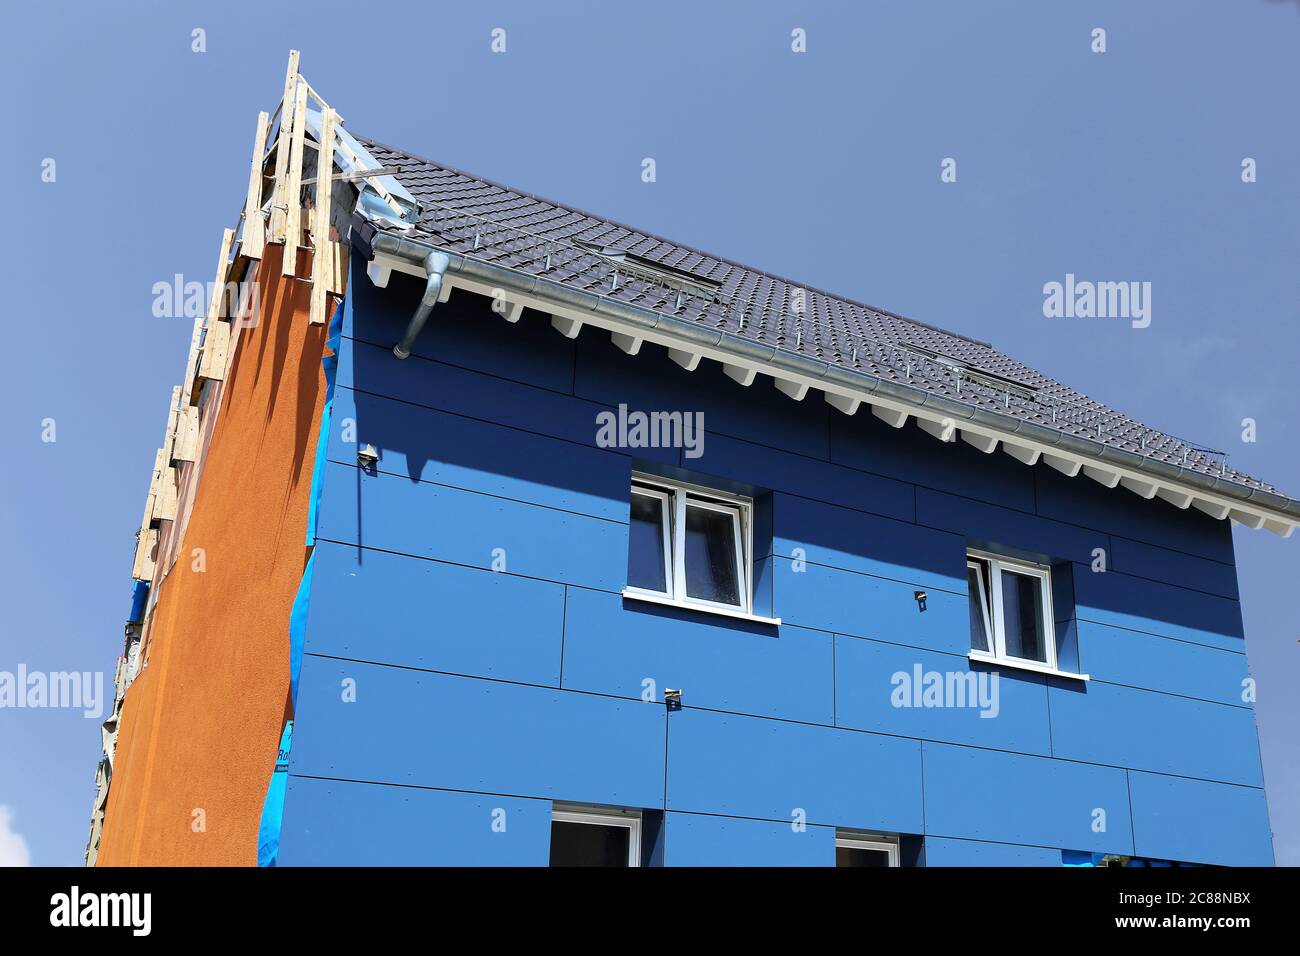 Residential home with facade cladding Stock Photo